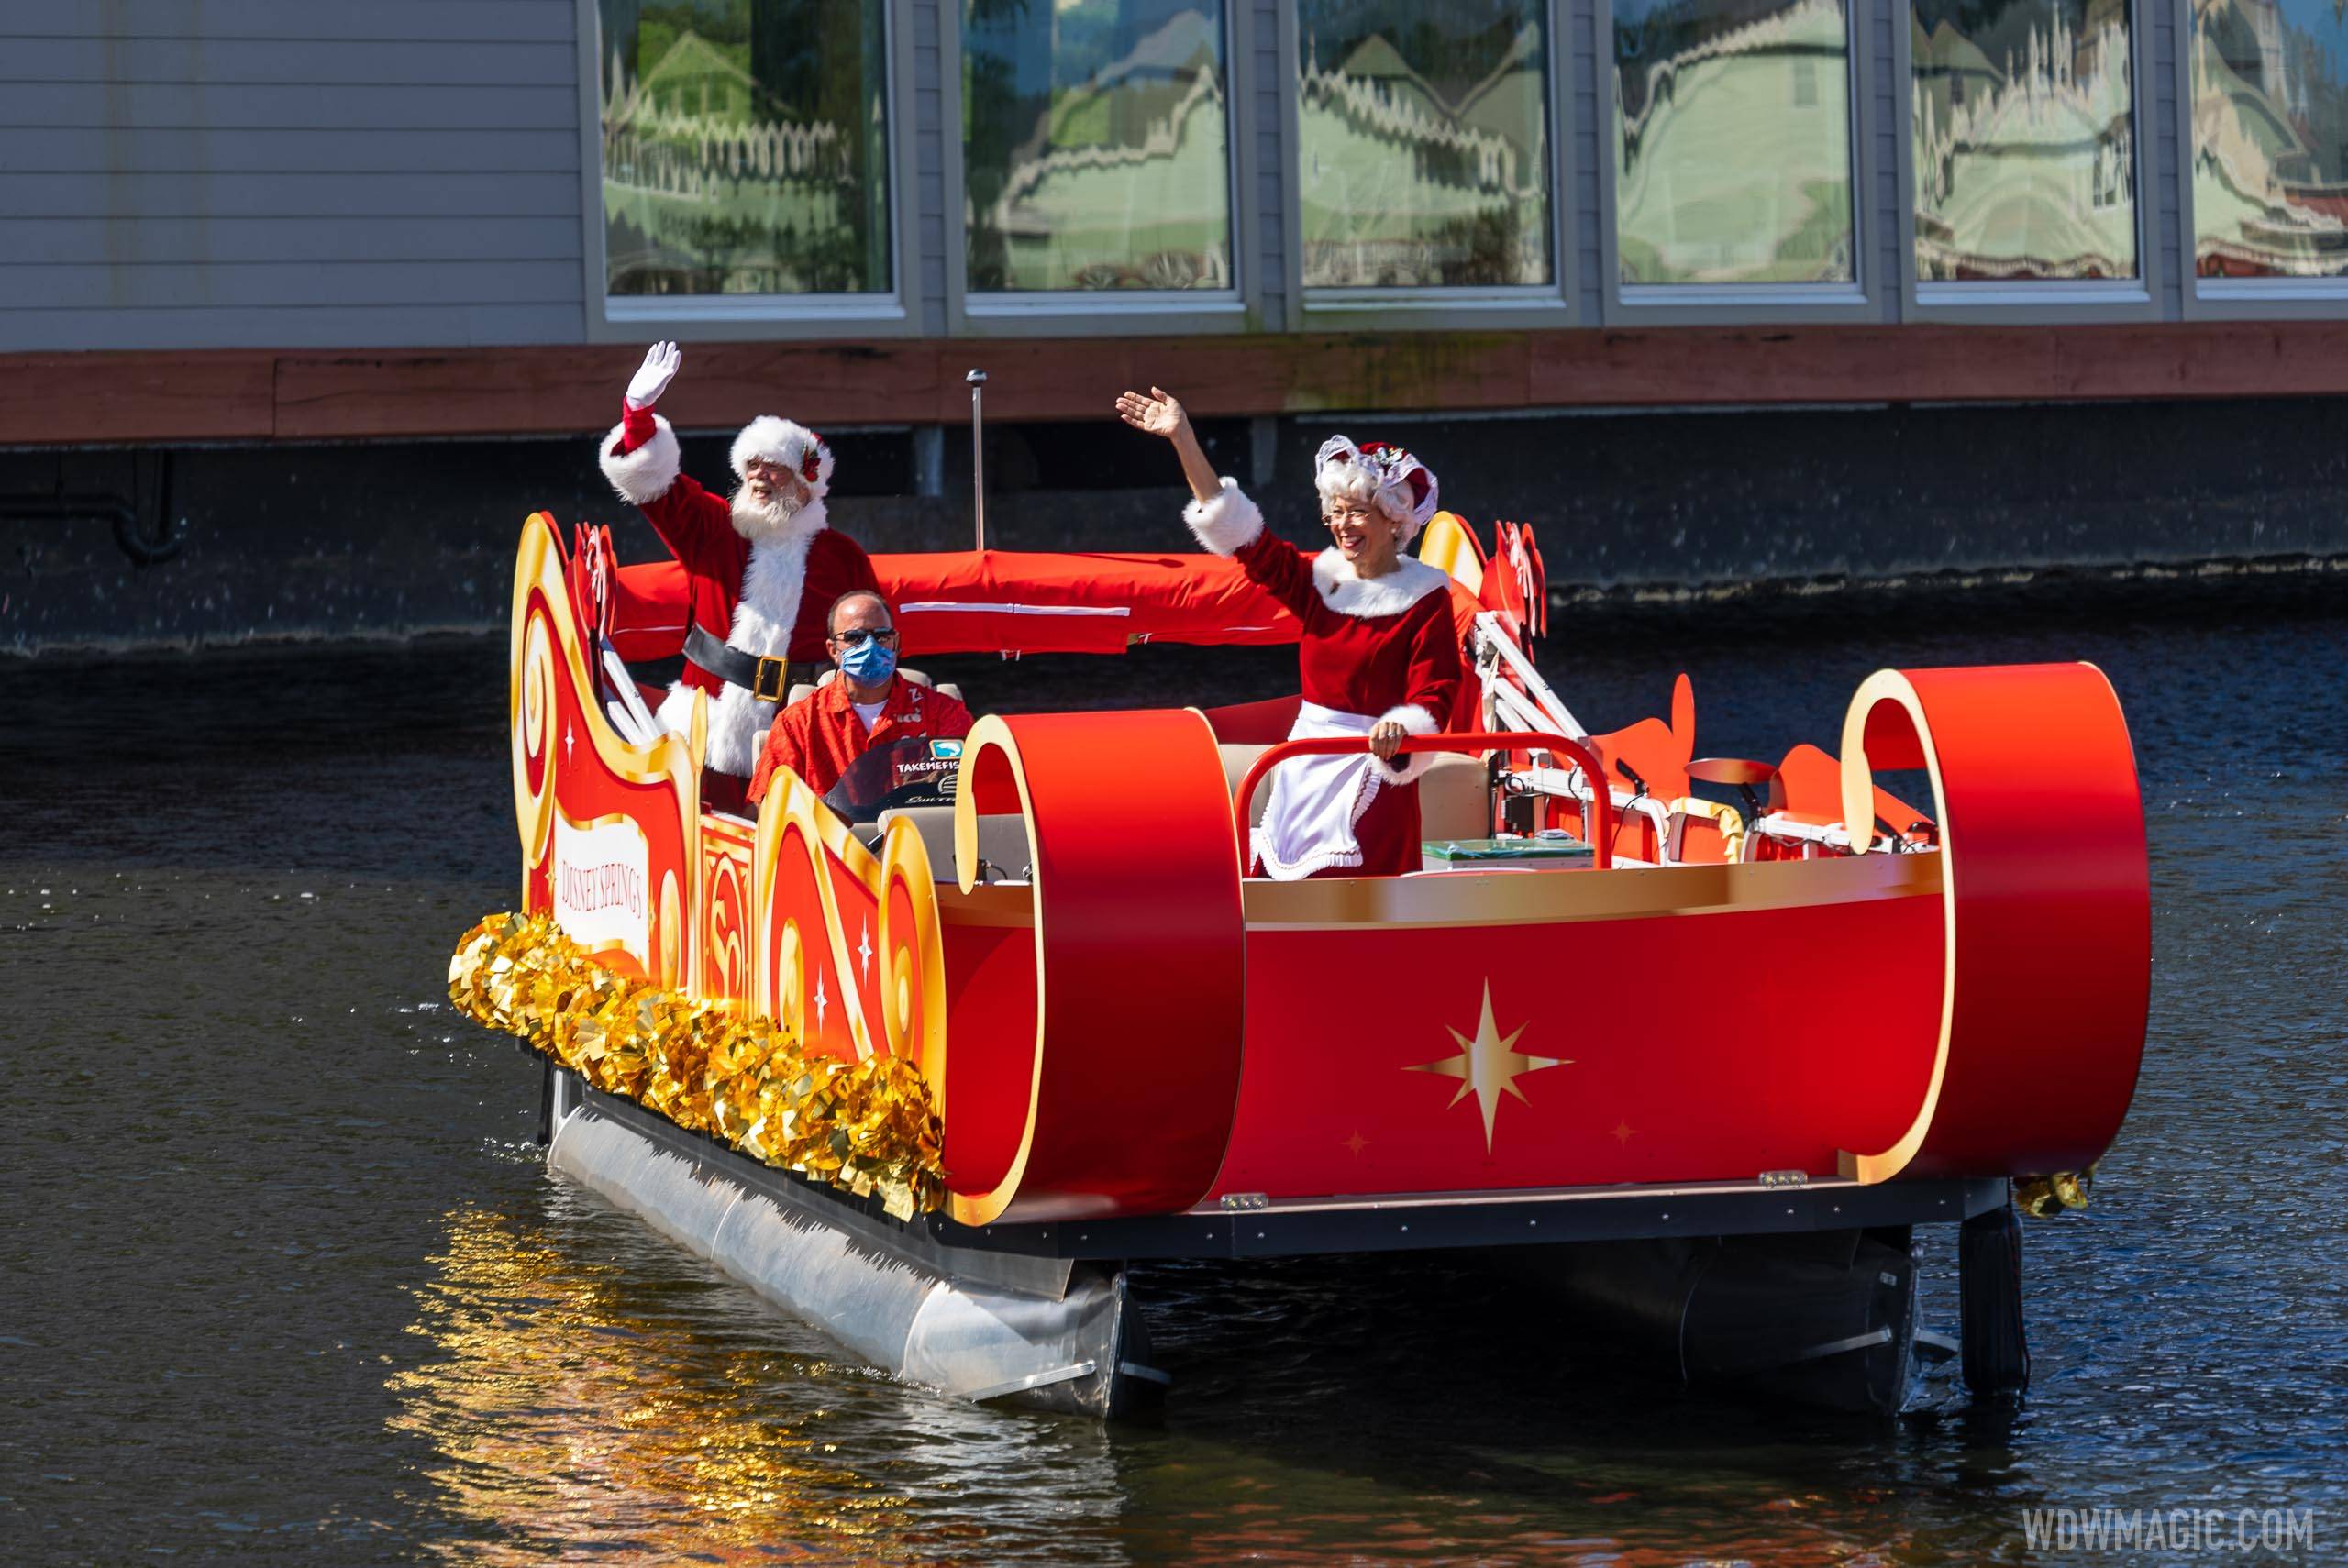 Santa Claus on the lake at Disney Springs 2020